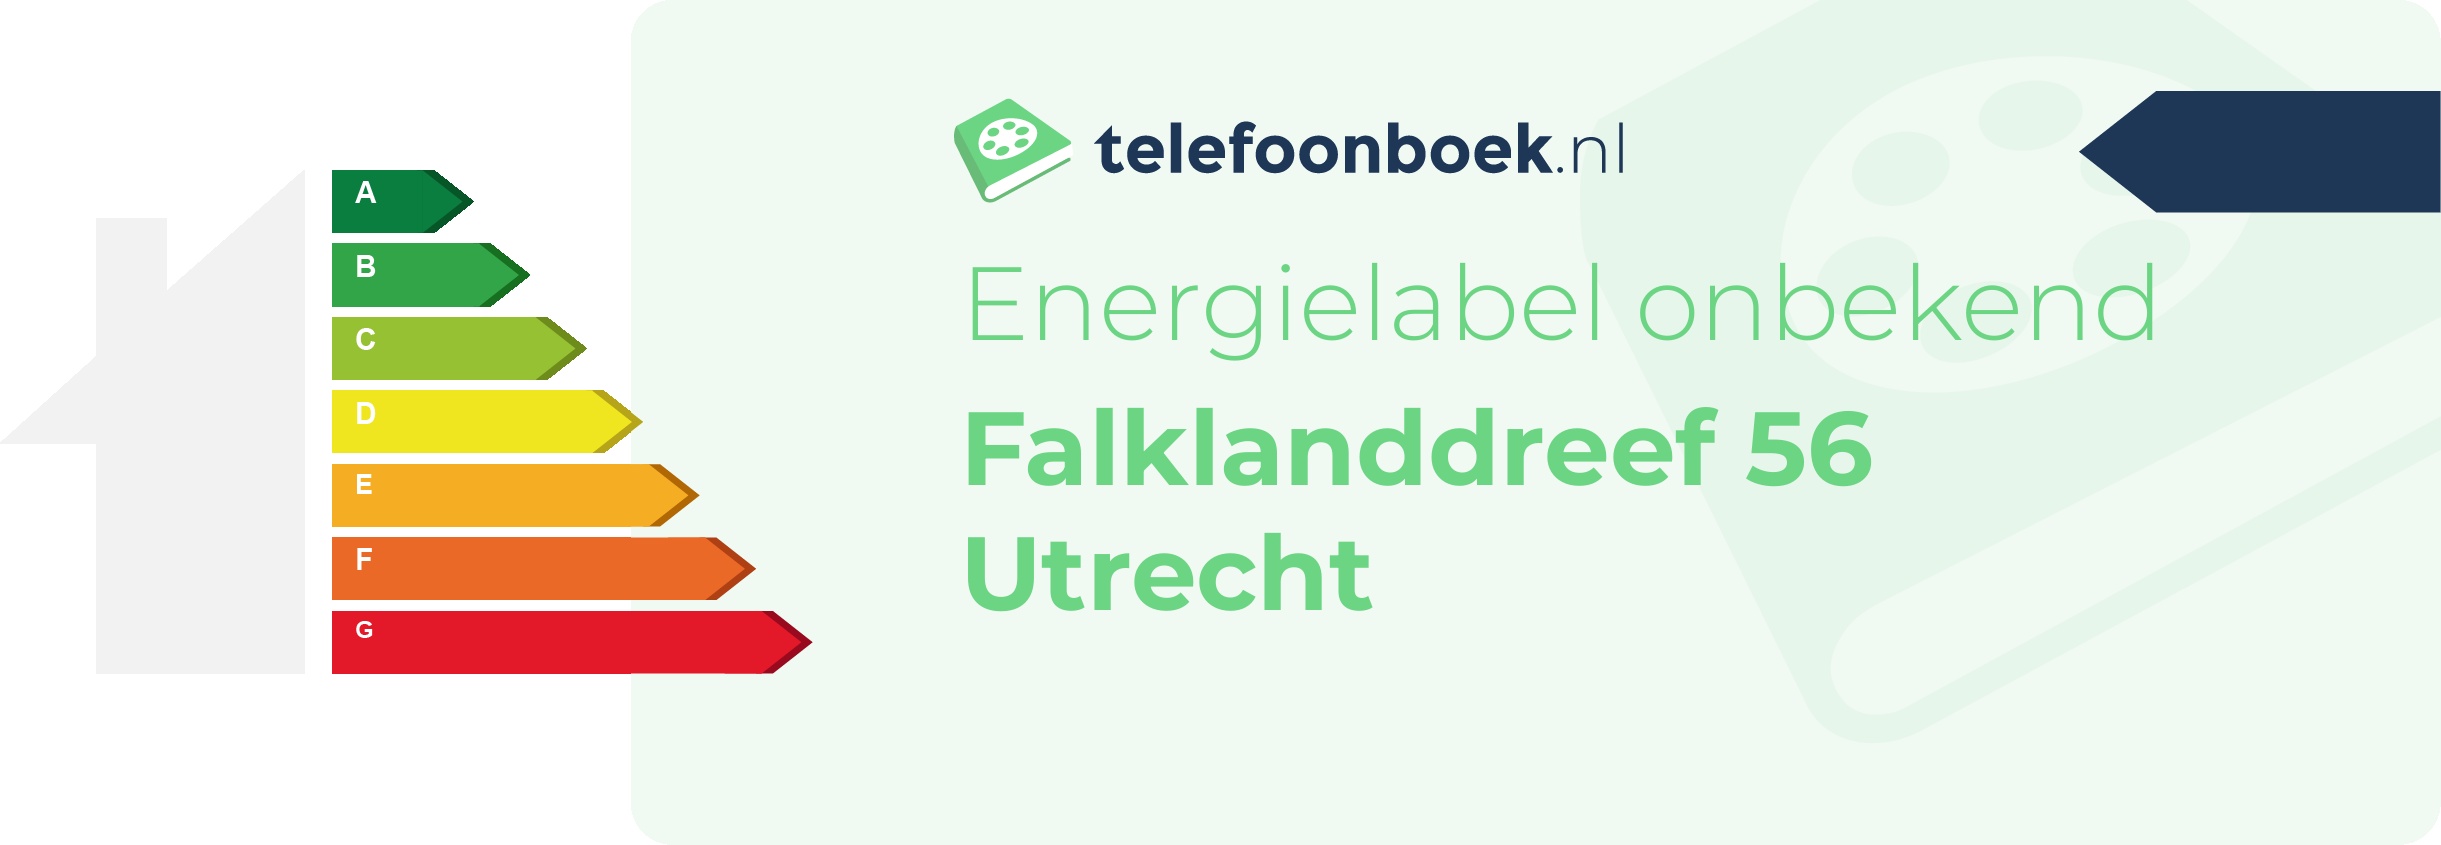 Energielabel Falklanddreef 56 Utrecht